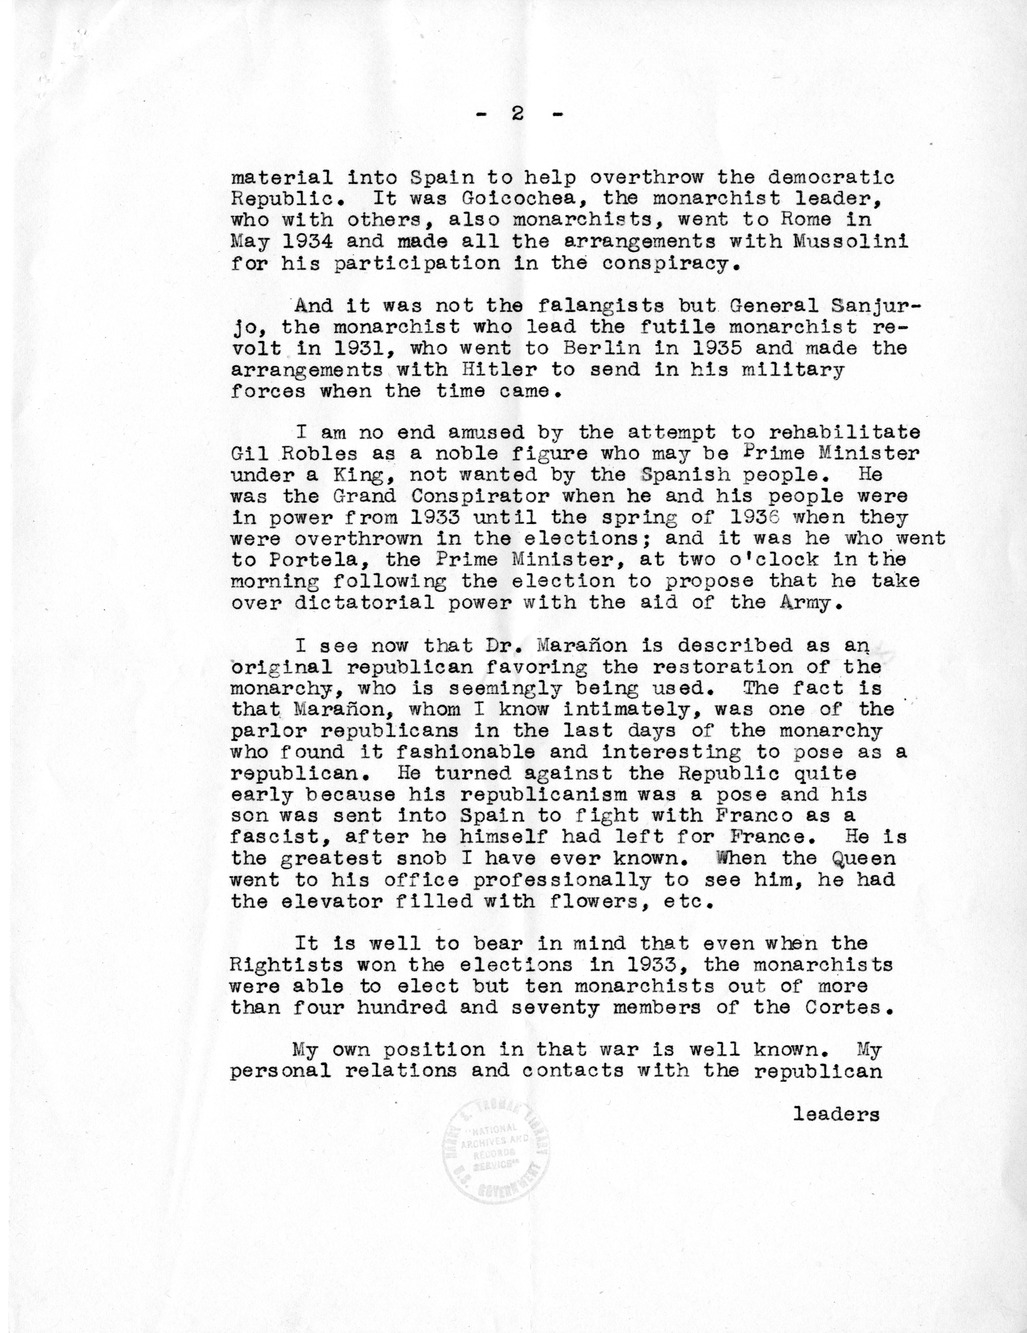 Correspondence Between Ambassador Claude Bowers and President Harry S. Truman